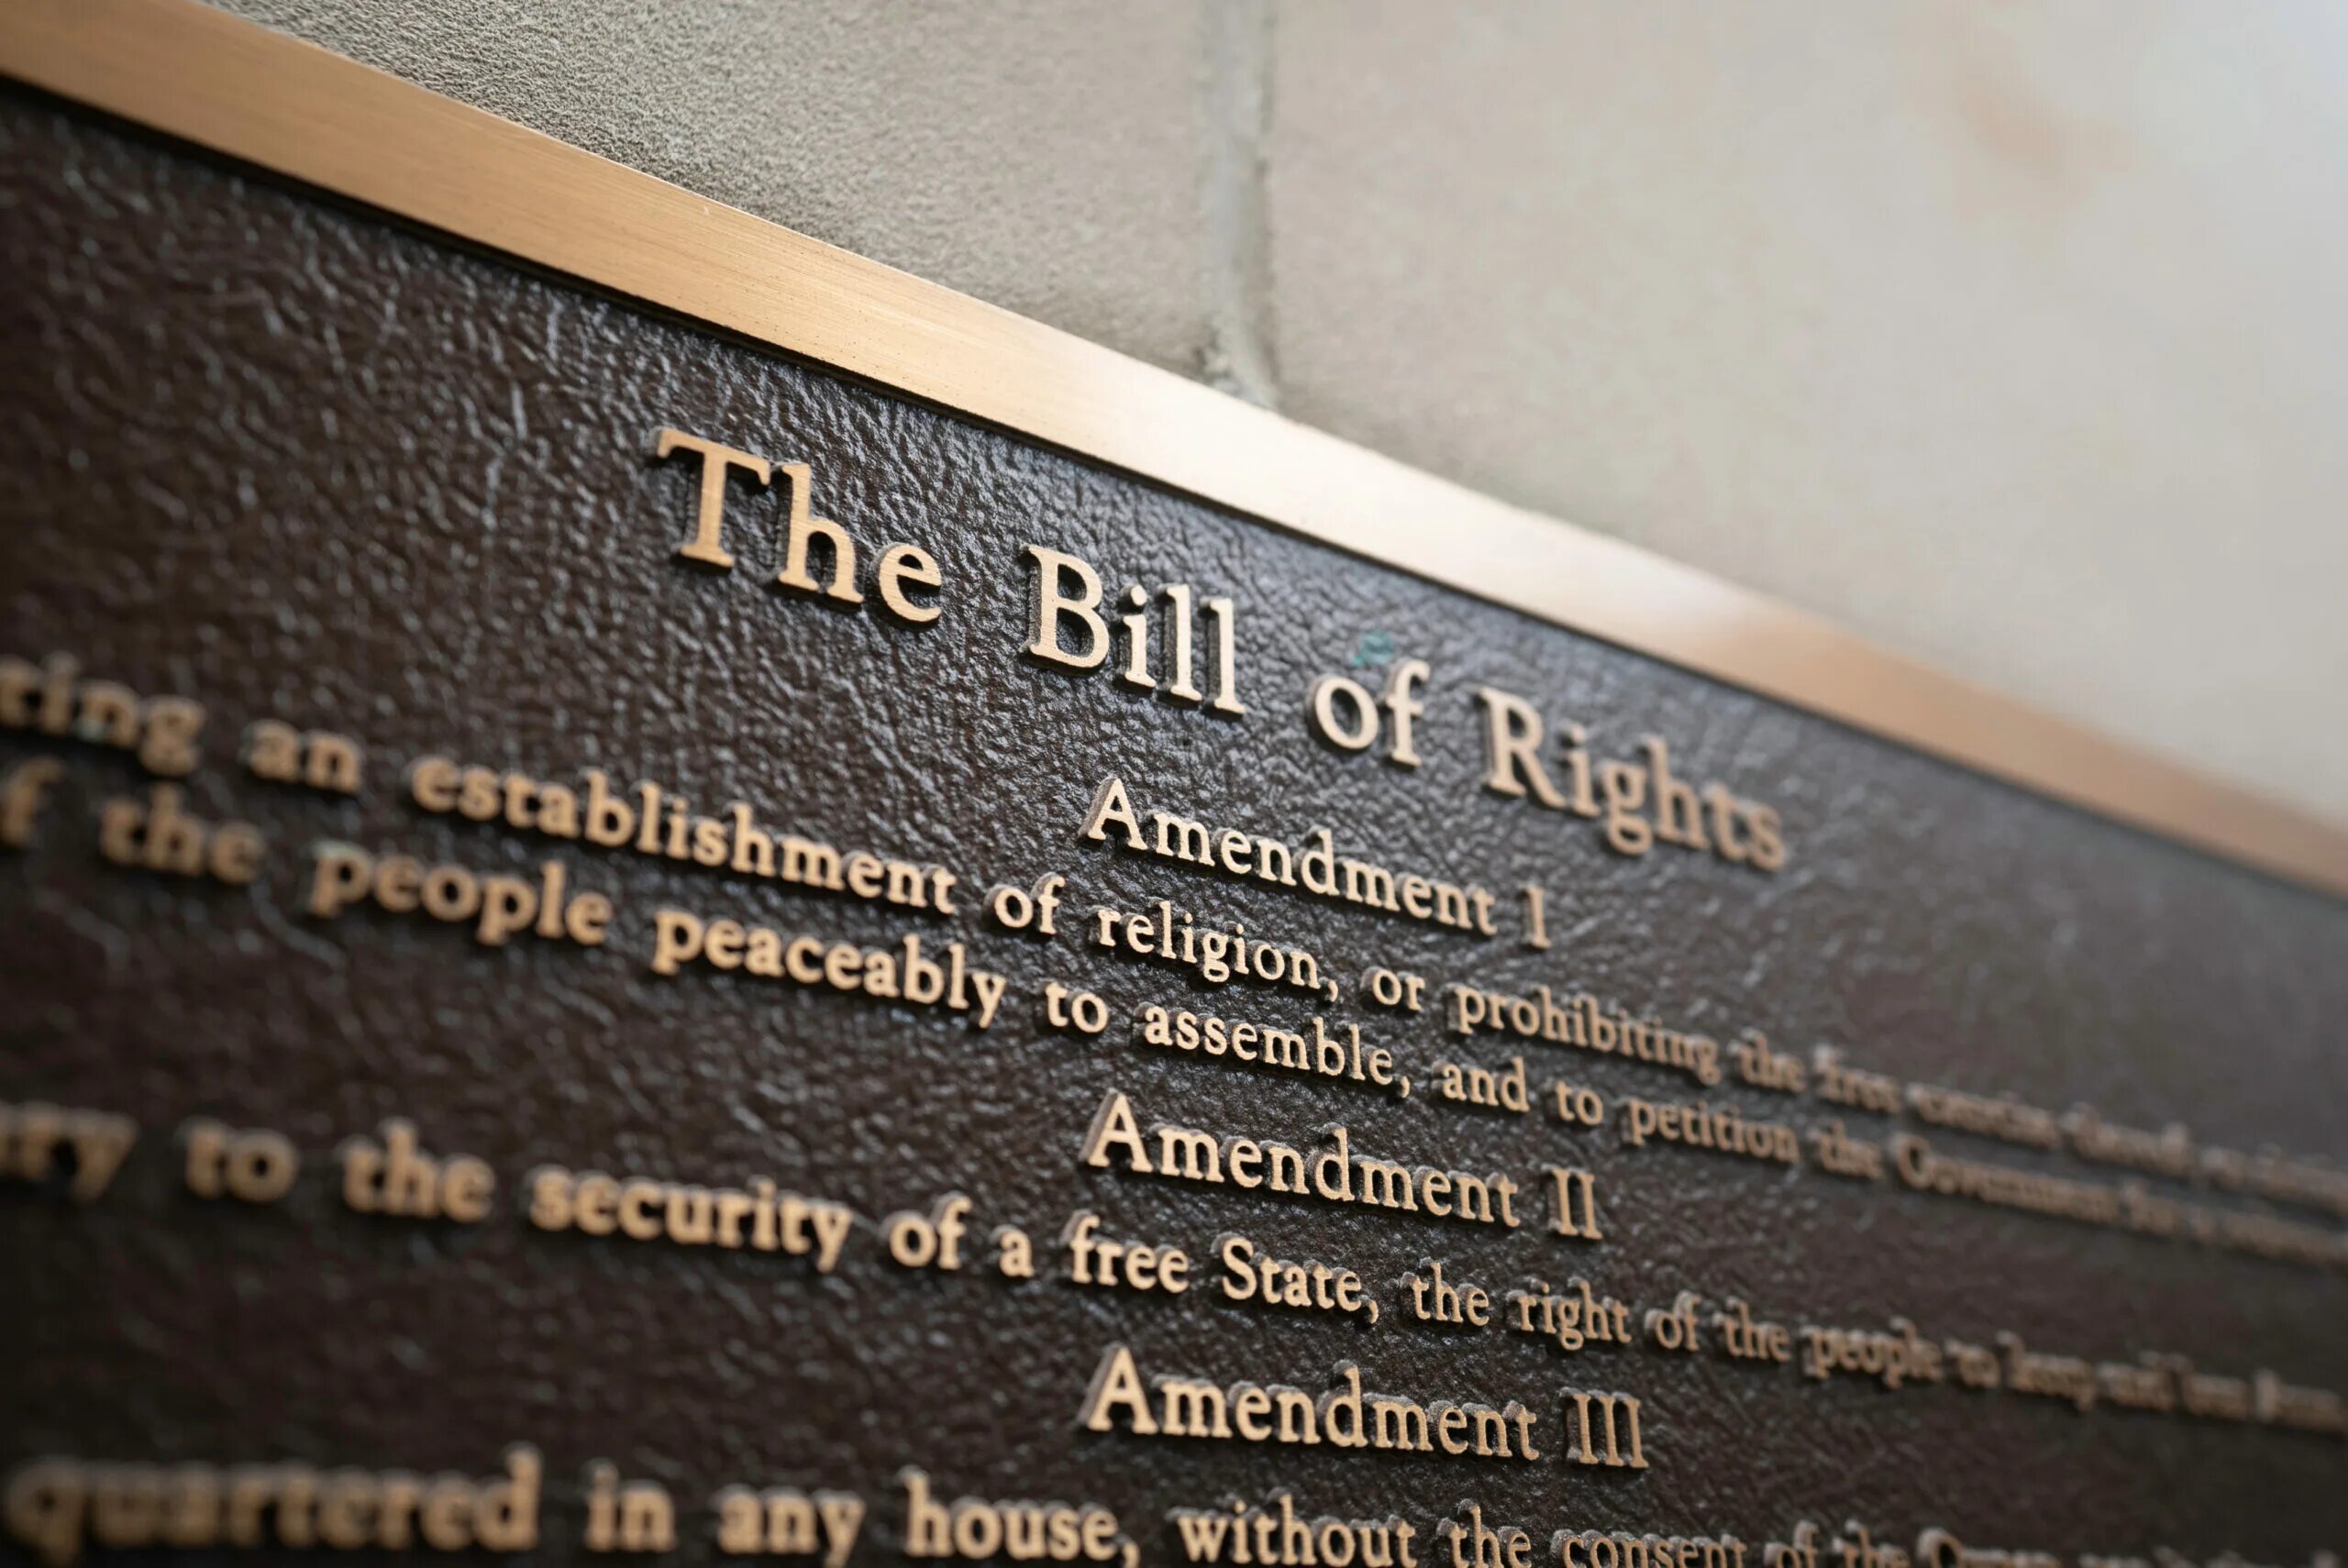 The Bill of rights. Международный Билль прав человека. Международный Билль о правах. Билль о правах США. Принятие конгрессом сша билля о правах год